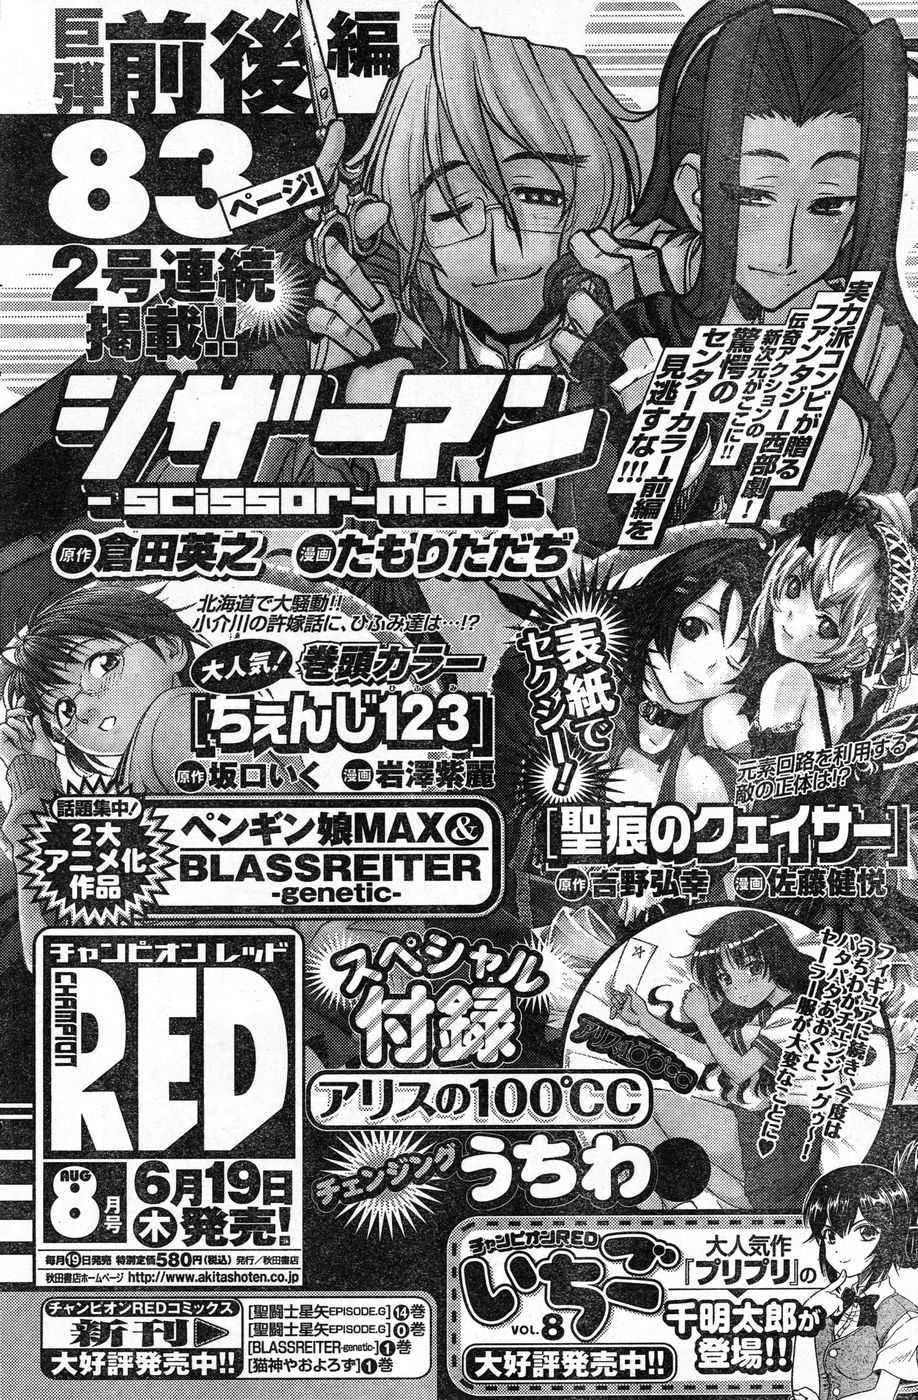 Young Champion Retsu Vol.13 (雑誌) ヤングチャンピオン烈 Vol.13